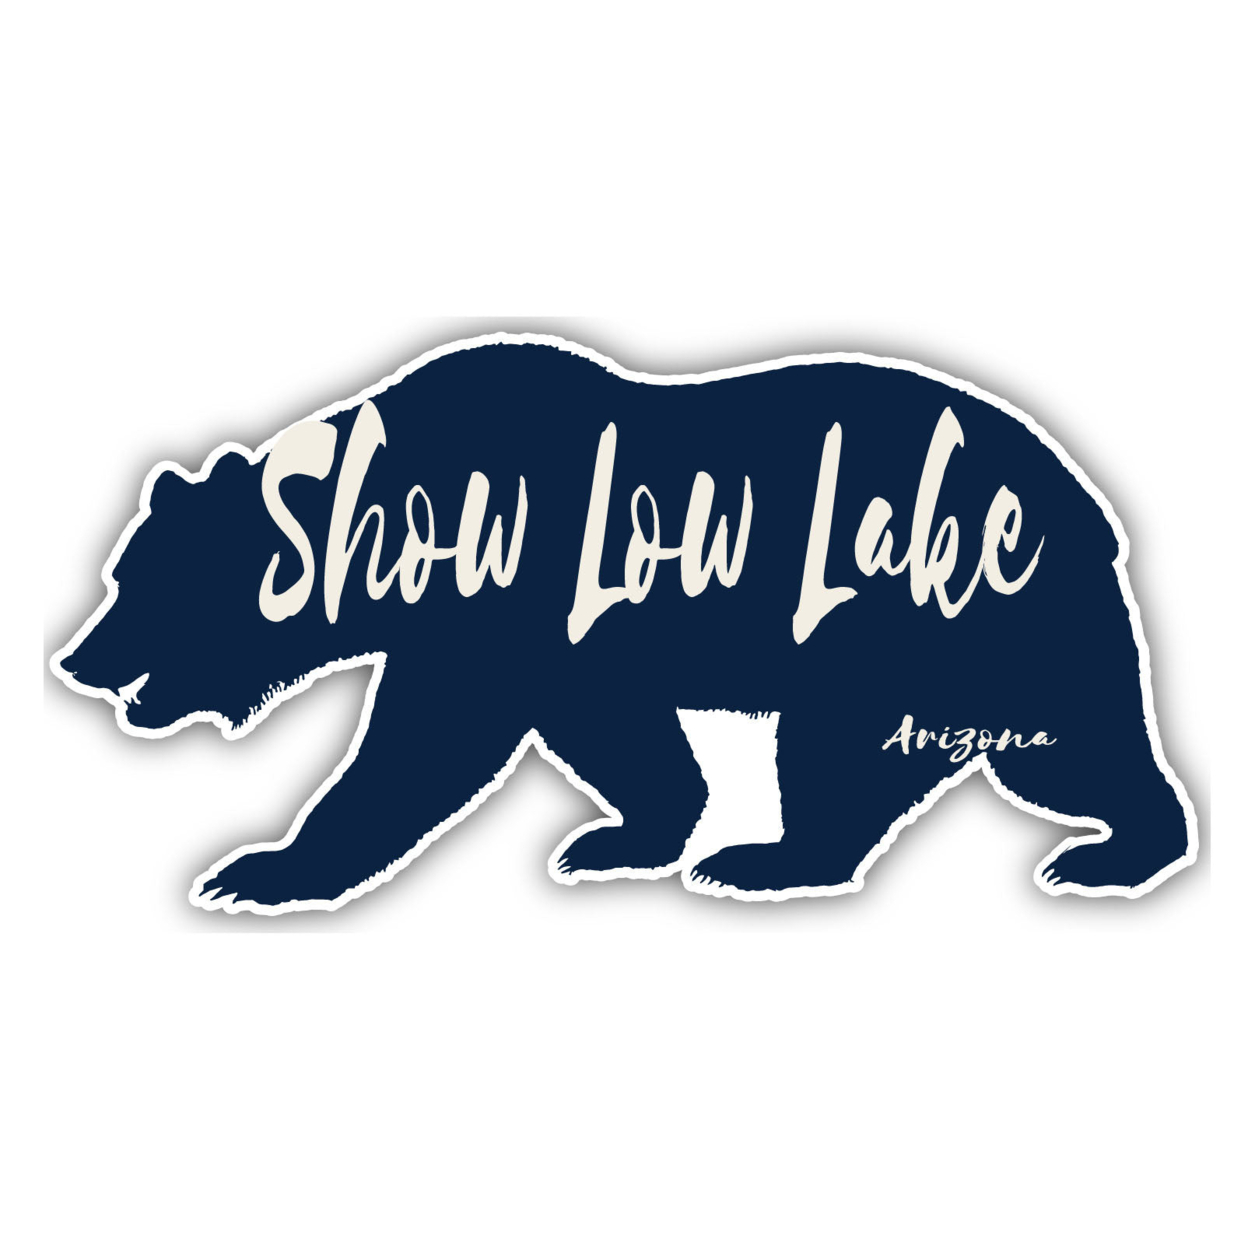 Show Low Lake Arizona Souvenir Decorative Stickers (Choose Theme And Size) - Single Unit, 2-Inch, Bear